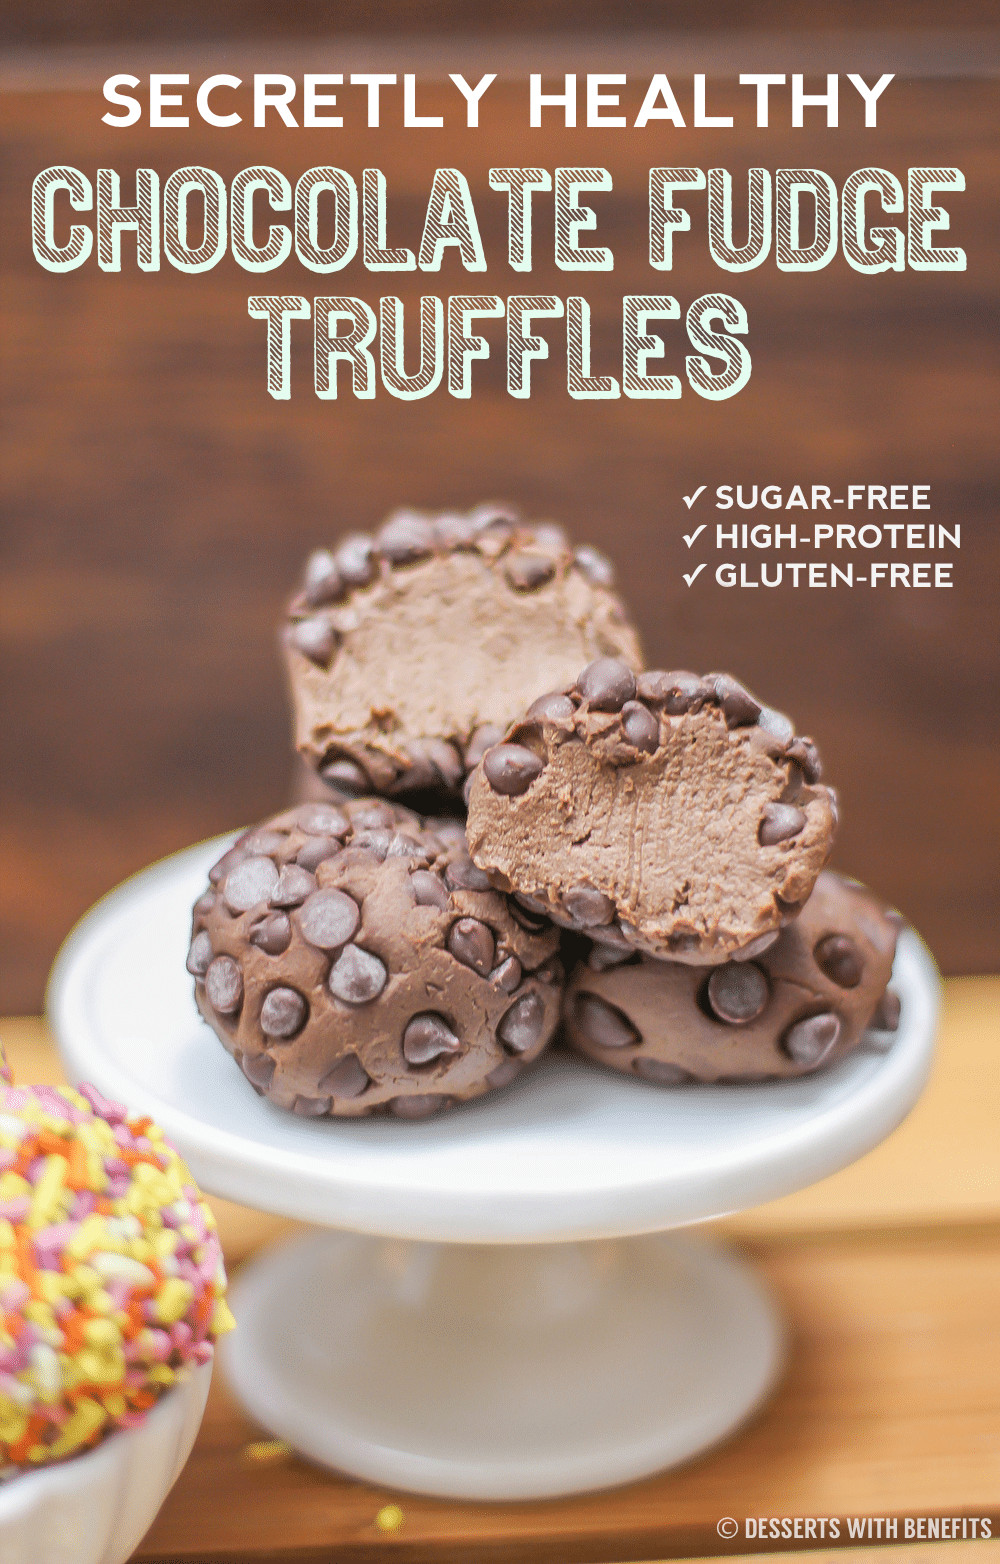 Low Fat Low Sugar Recipes
 Healthy Chocolate Fudge Truffles Recipe